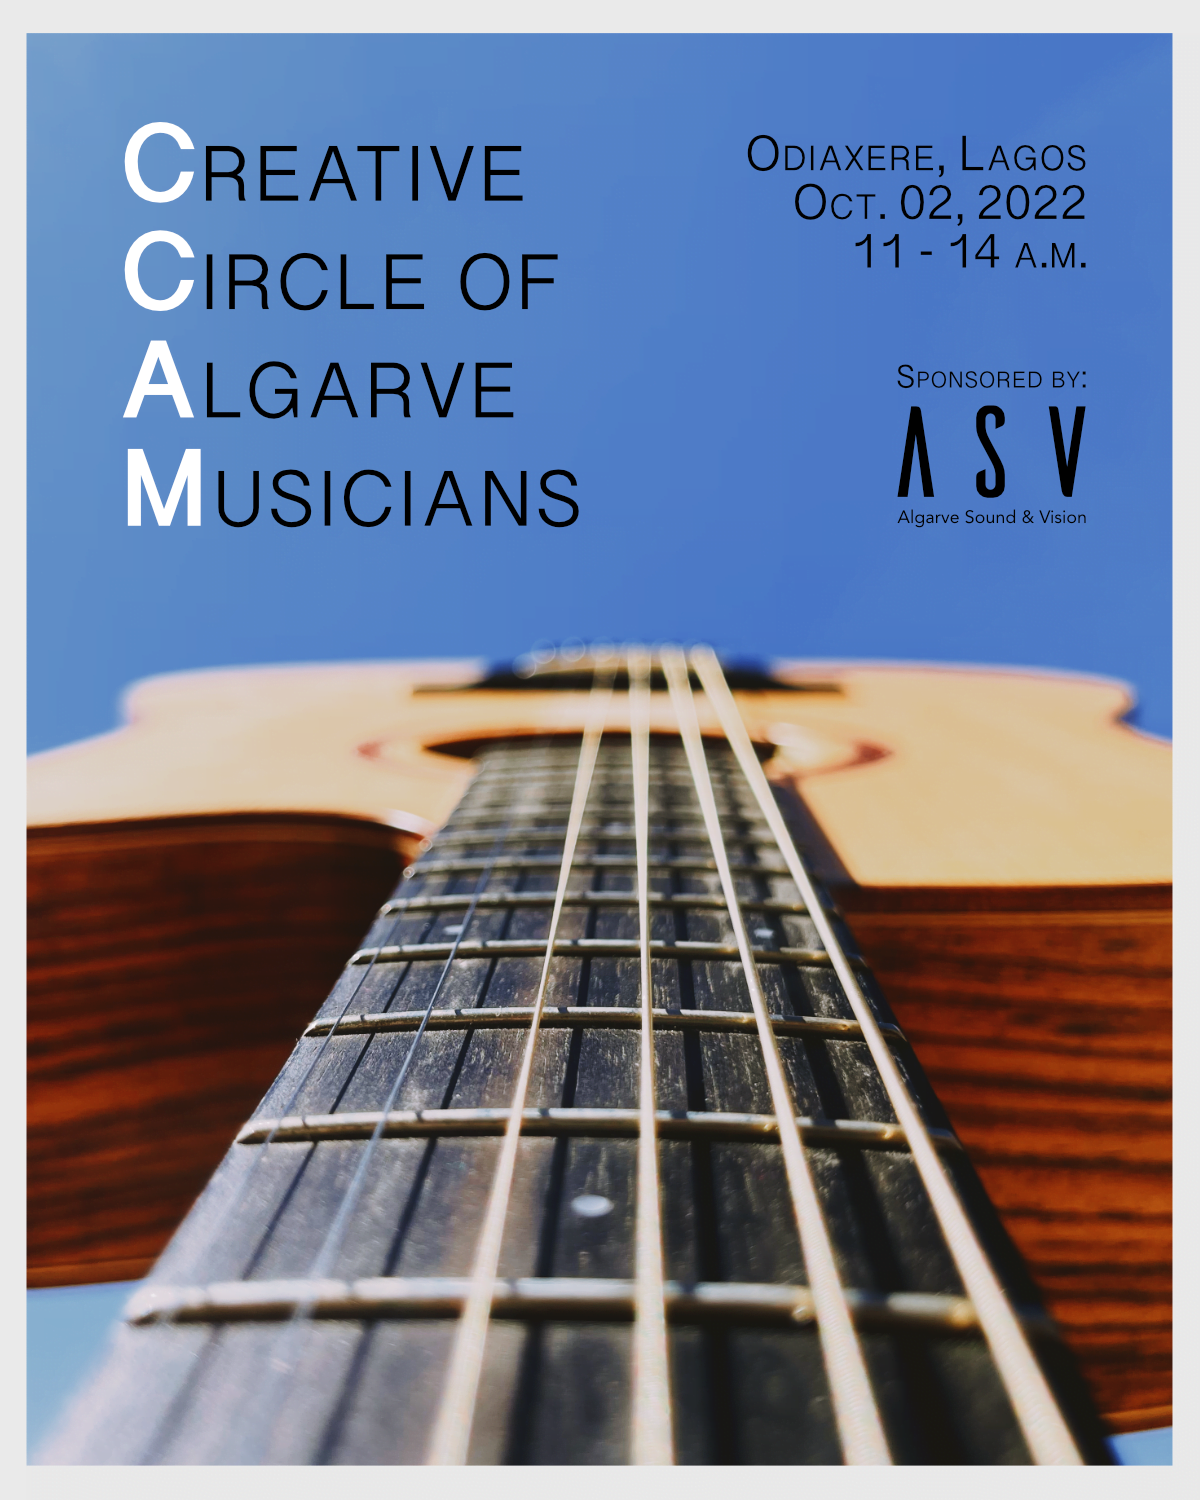 CCAM - Creative Circle of Algarve Musicians